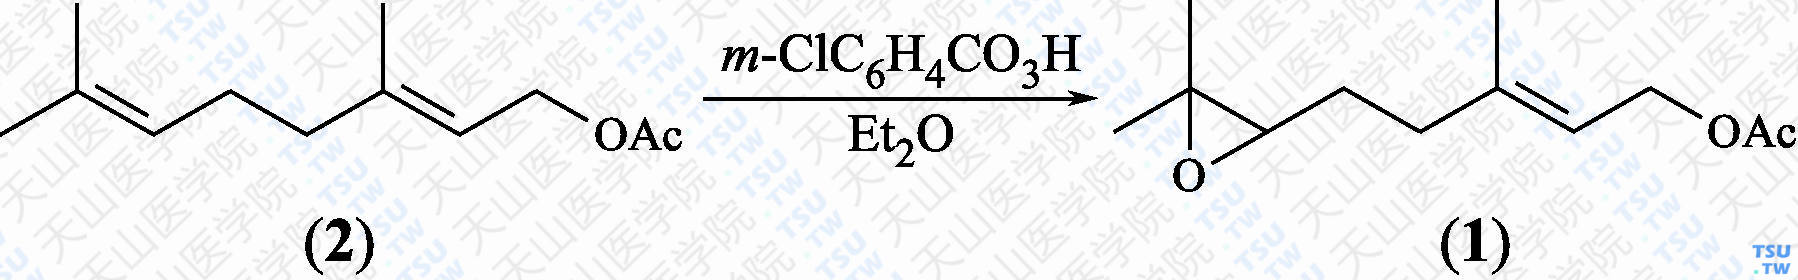 乙酸6，7-环氧香叶酯（分子式：C<sub>12</sub>H<sub>20</sub>O<sub>3</sub>）的合成方法路线及其结构式